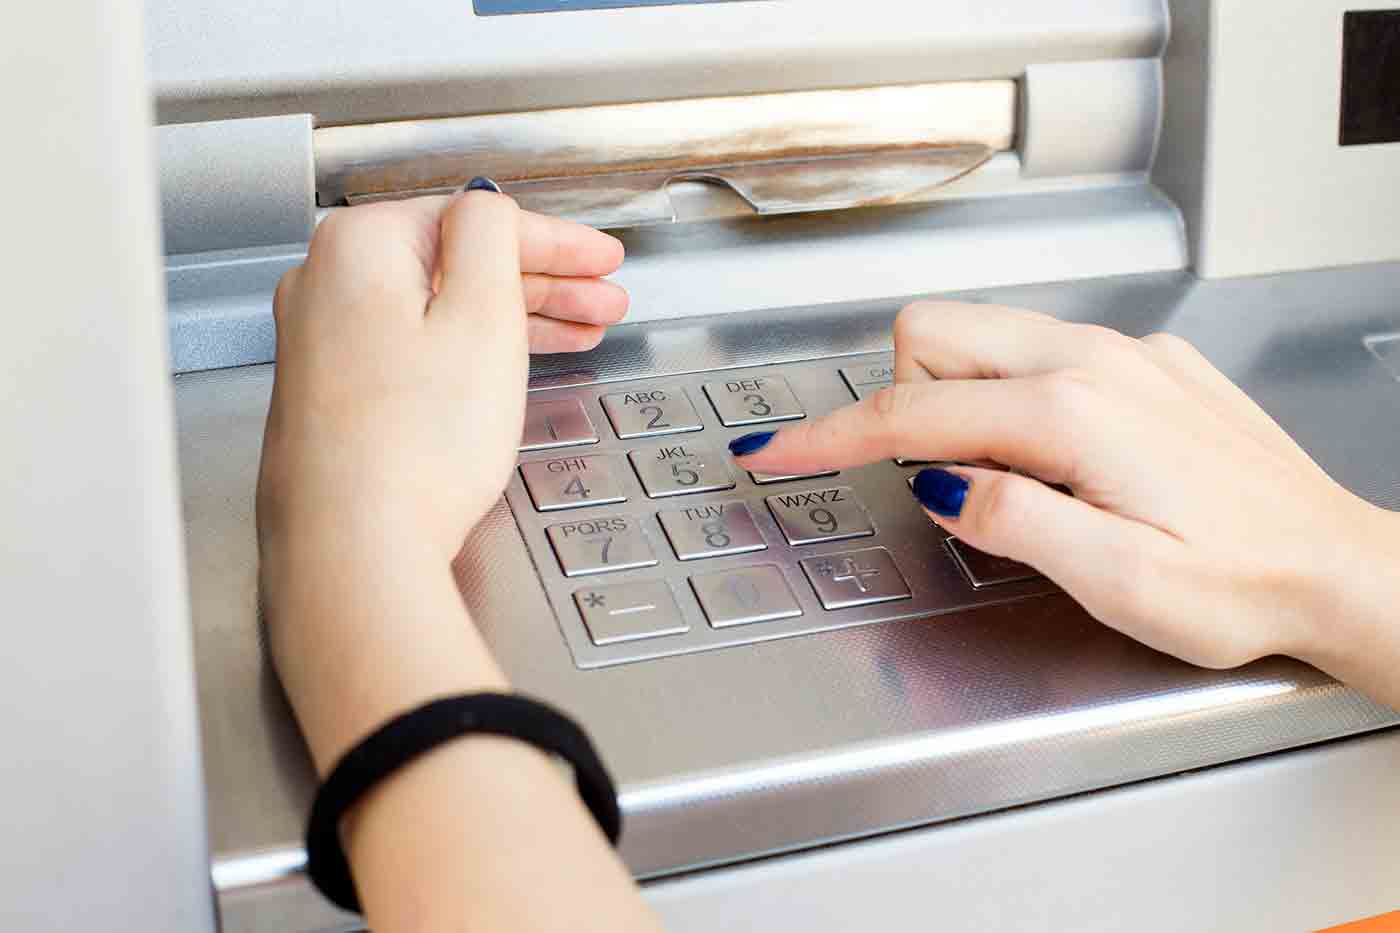 Hands on ATM Keypad (Stock Image)